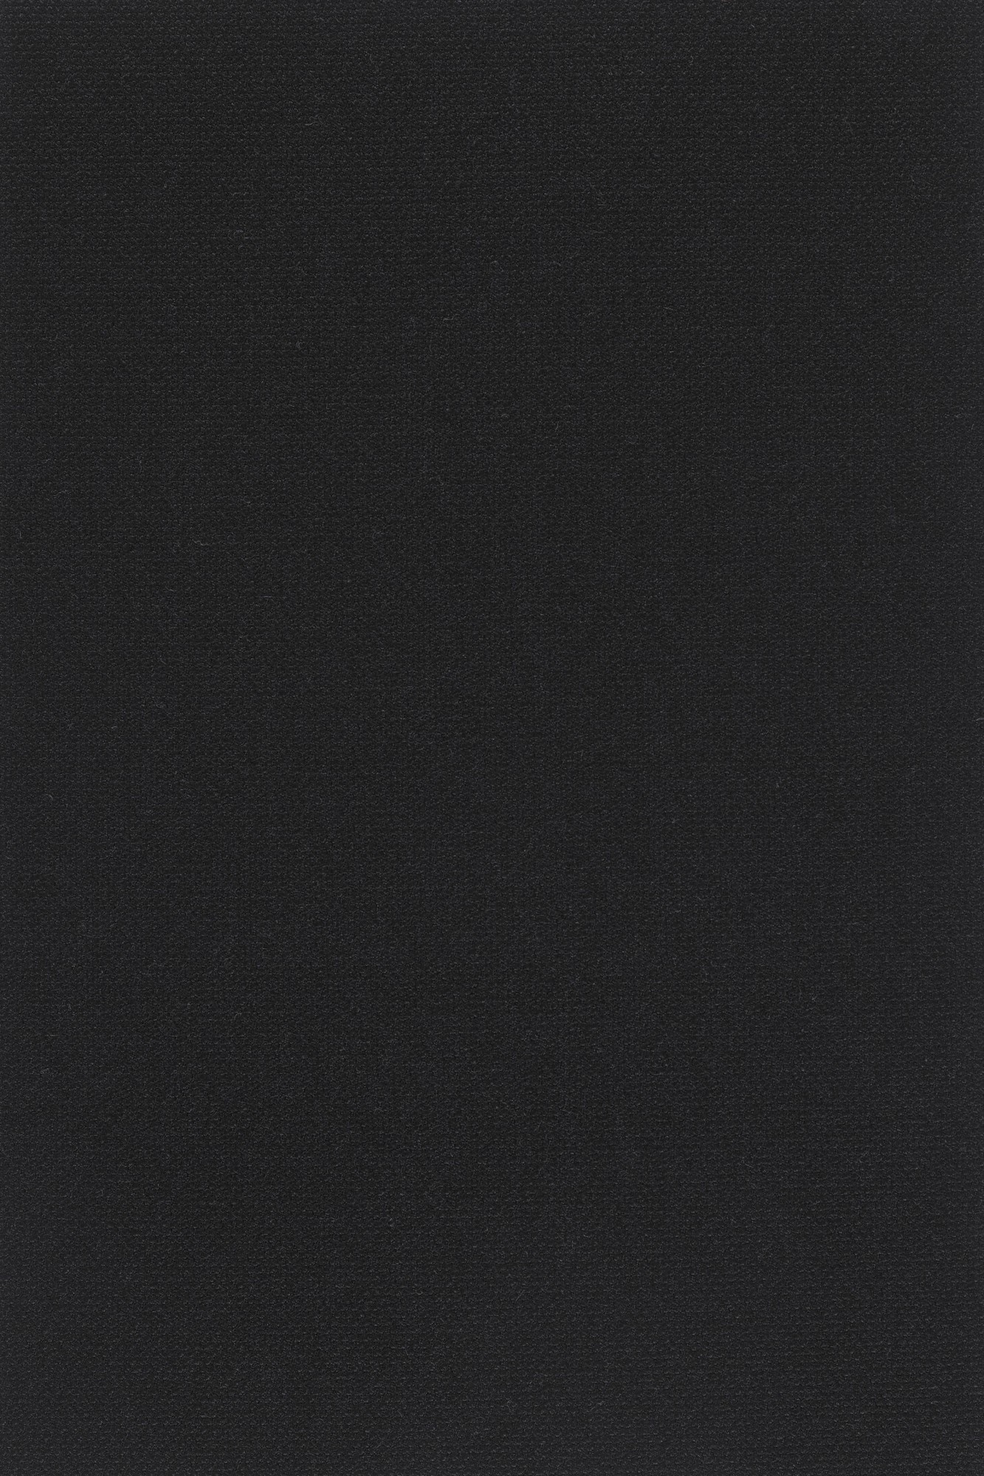 Fabric sample Steelcut 2 190 black